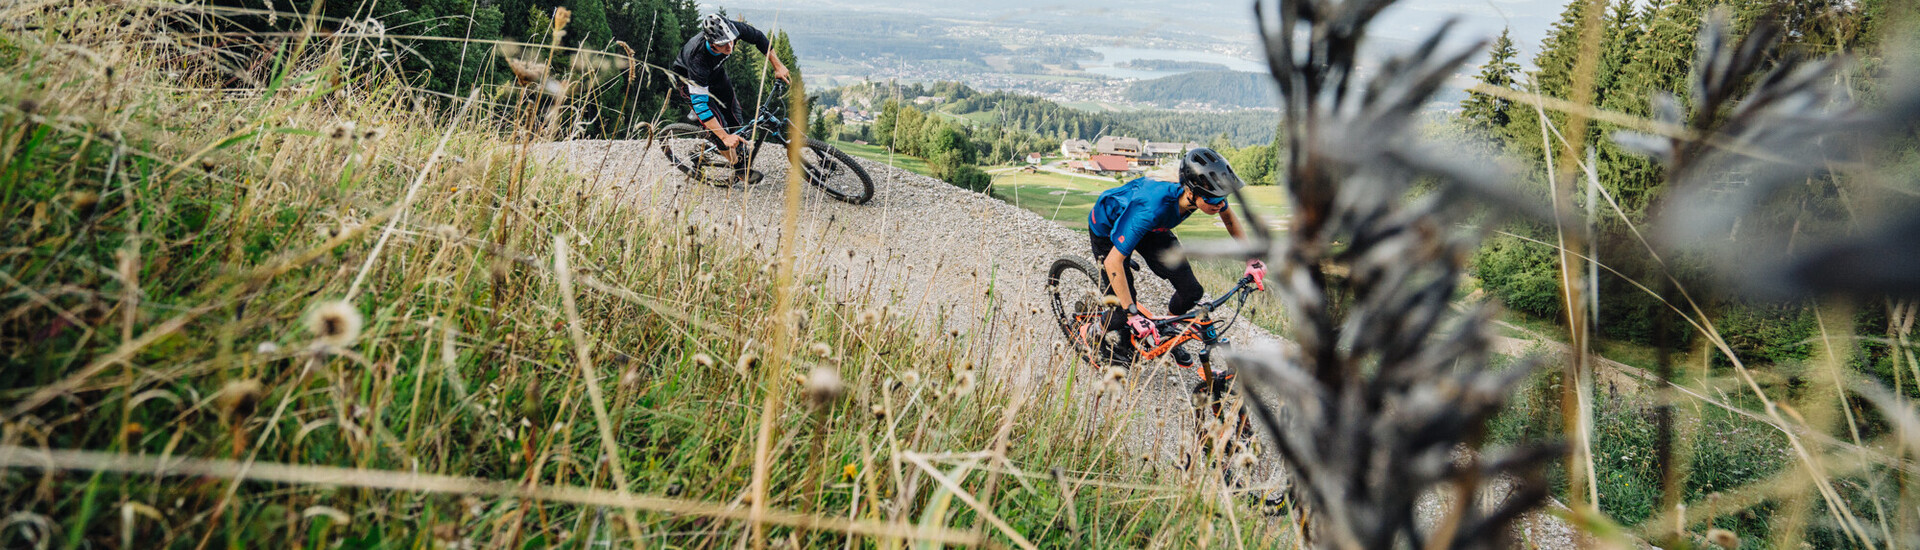 Downhill-Biker in Action in der lake.bike Region Kärnten